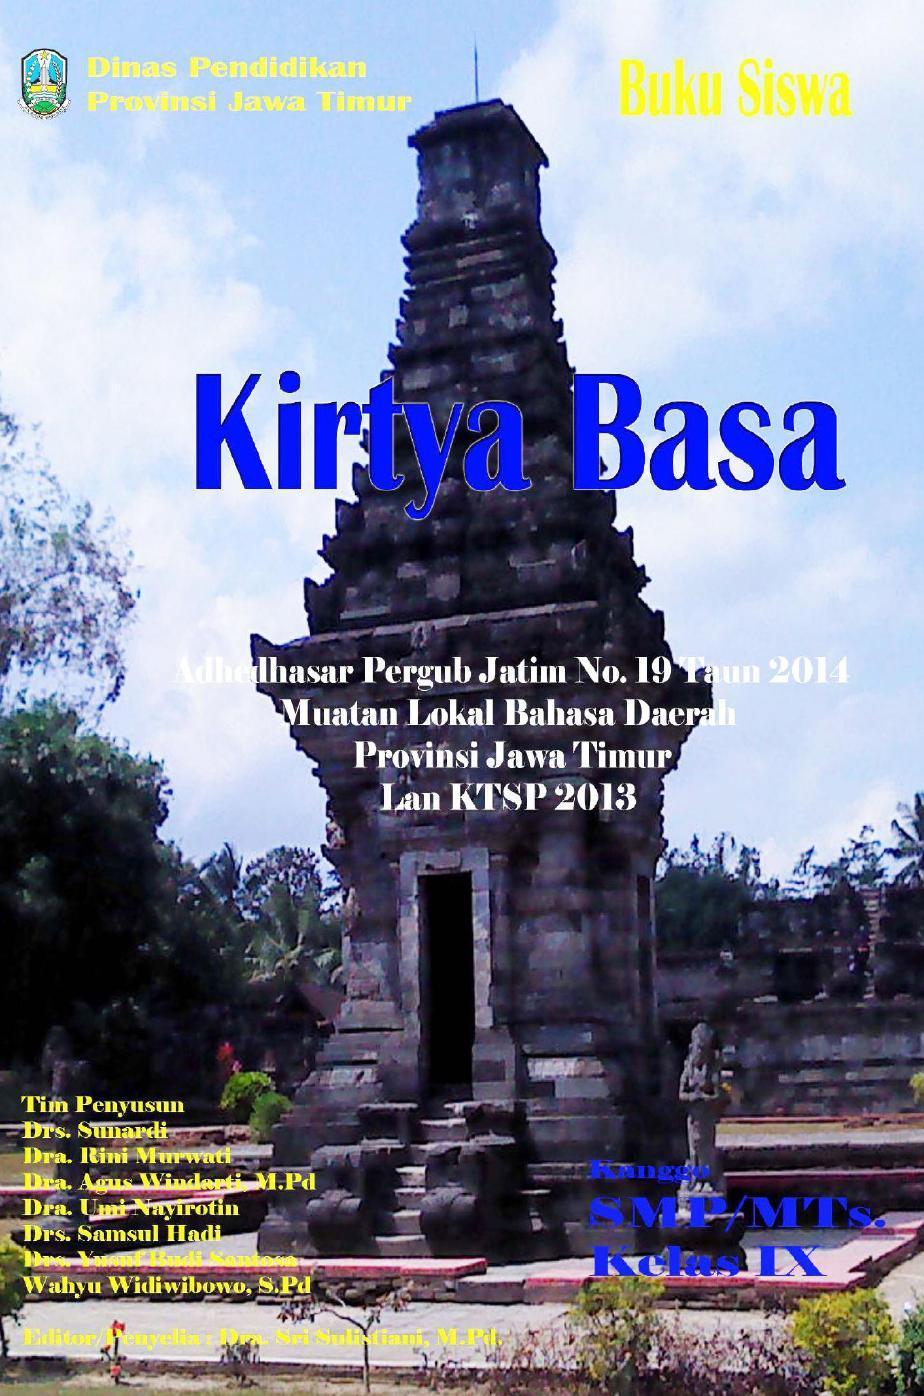 Buku Siswa Kelas 9 Bahasa Jawa Kirtya Basa 2015 For Android Apk Download